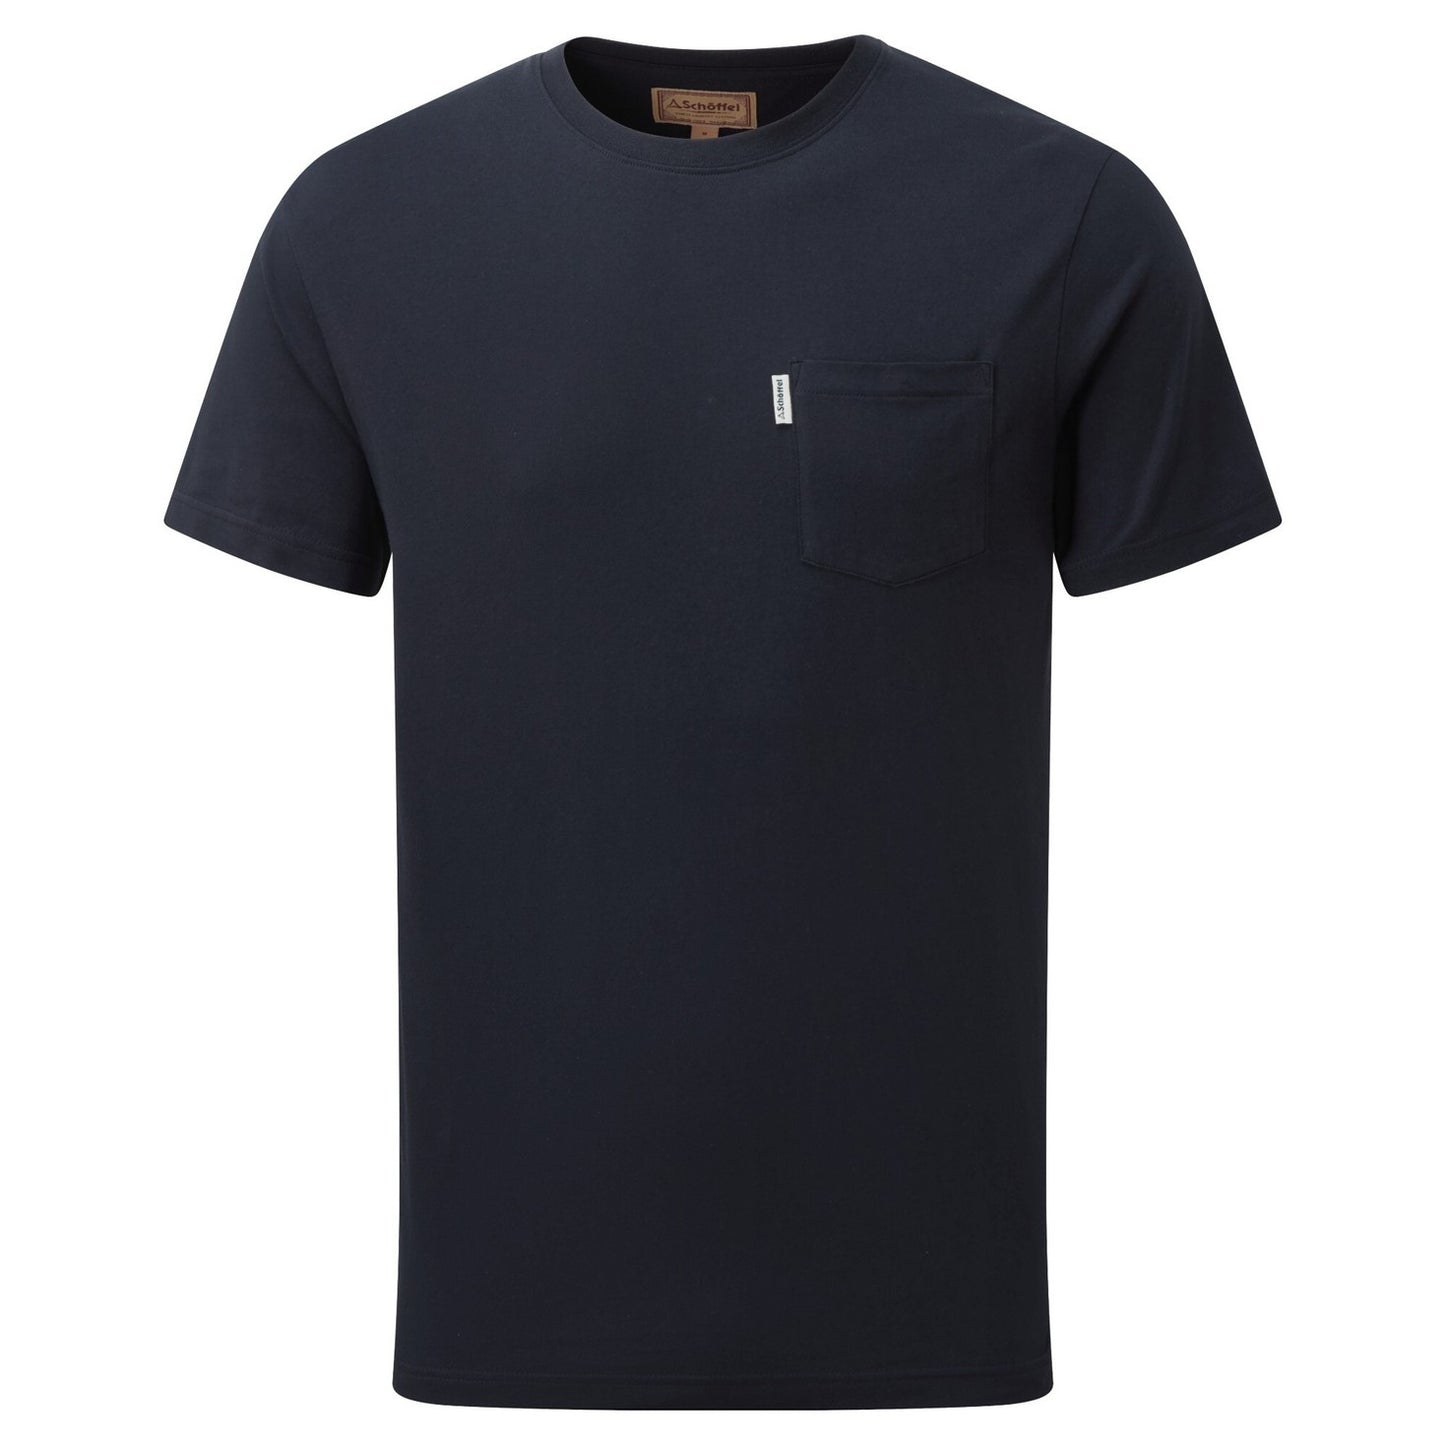 Schoffel T Shirts, the Towan T Shirt